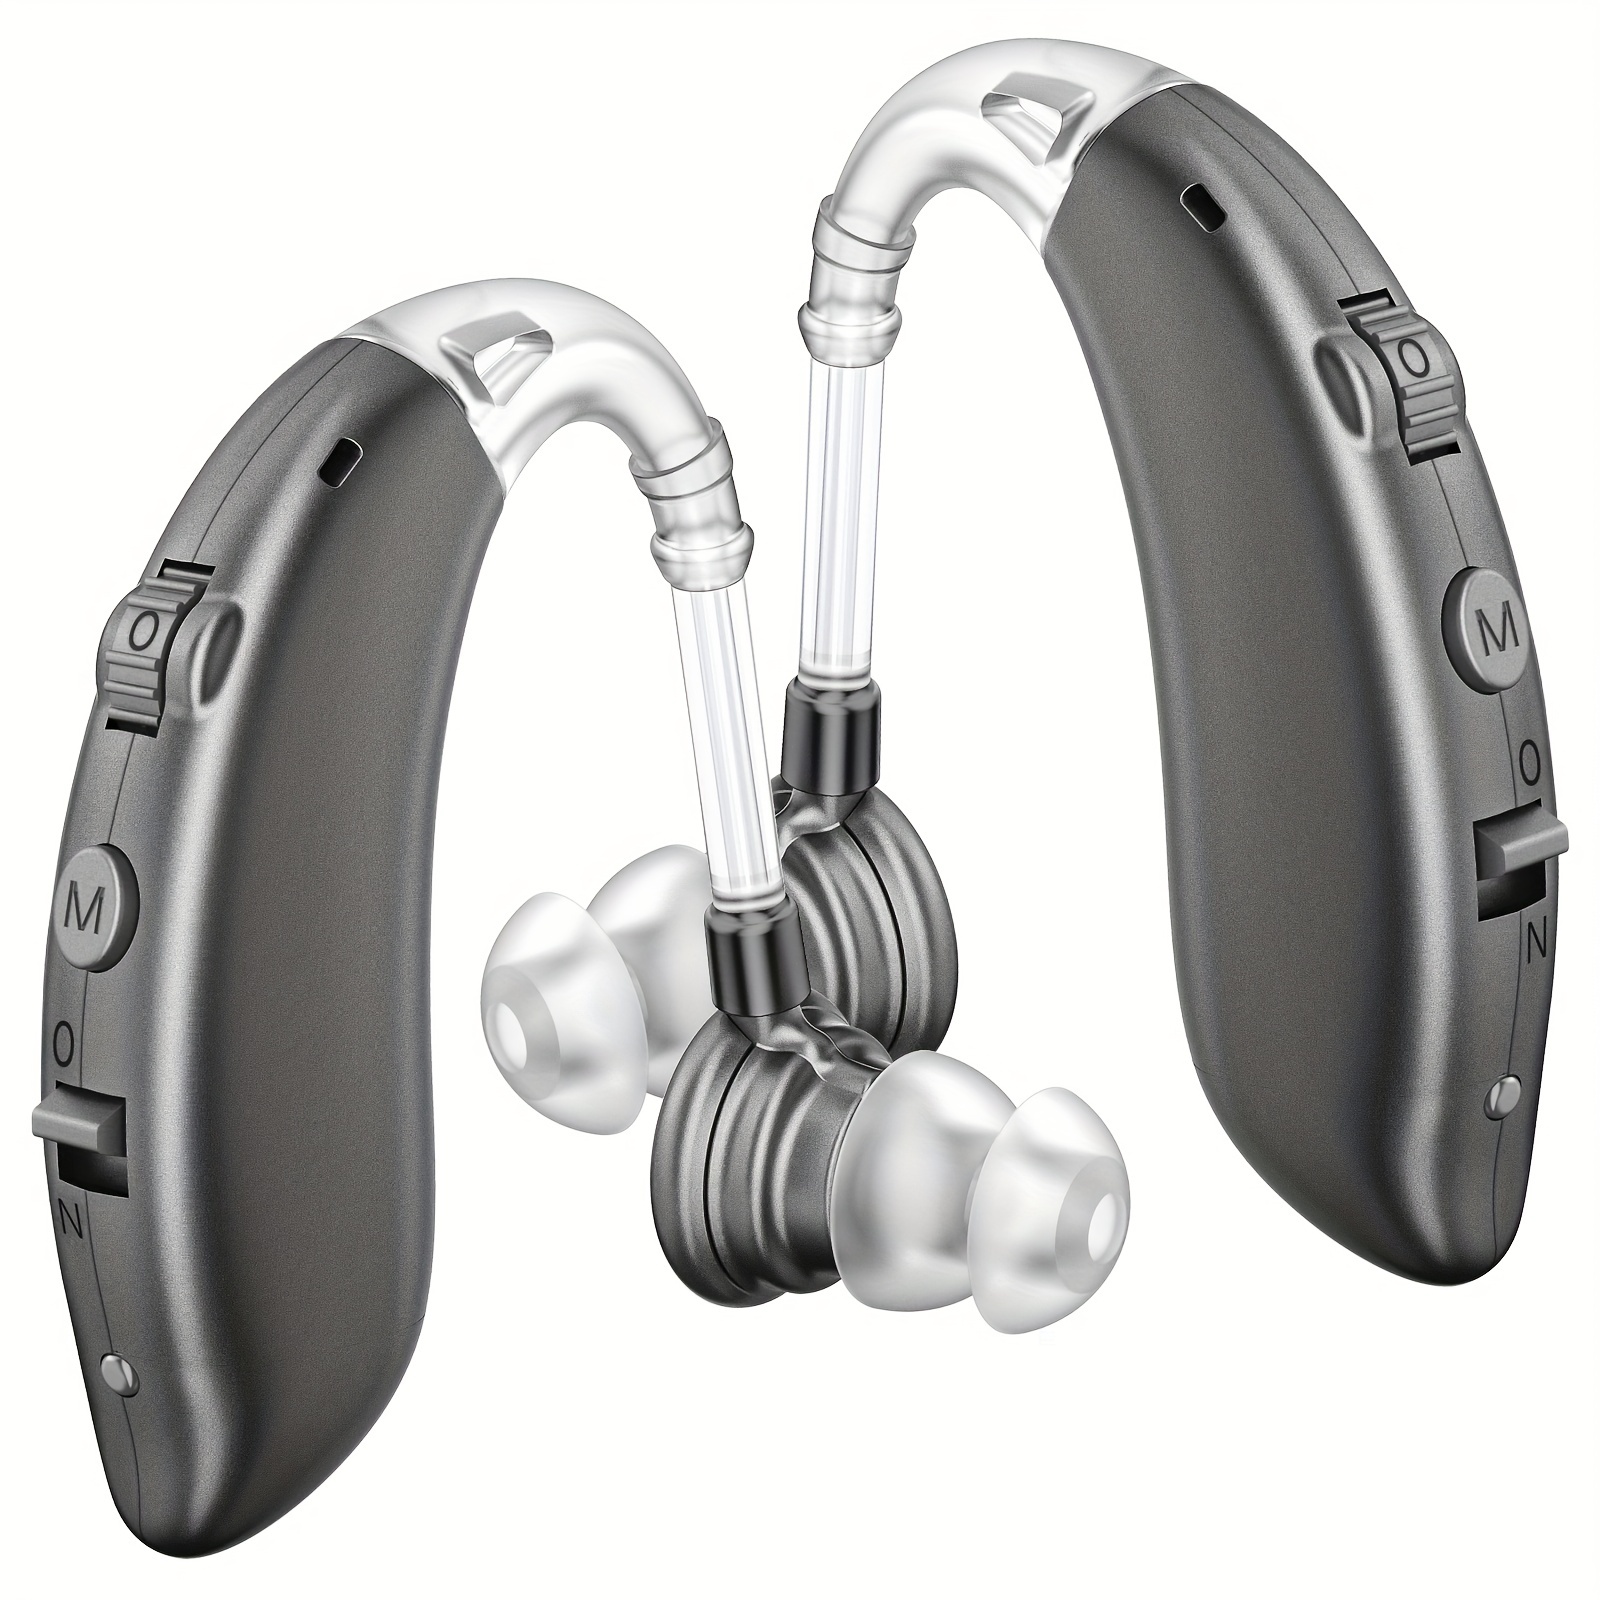 Comprar Mini audífono portátil ajustable Invisible recargable inalámbrico  Digital amplificadores de sonido audífonos potenciador de sonido para  sordos/ancianos